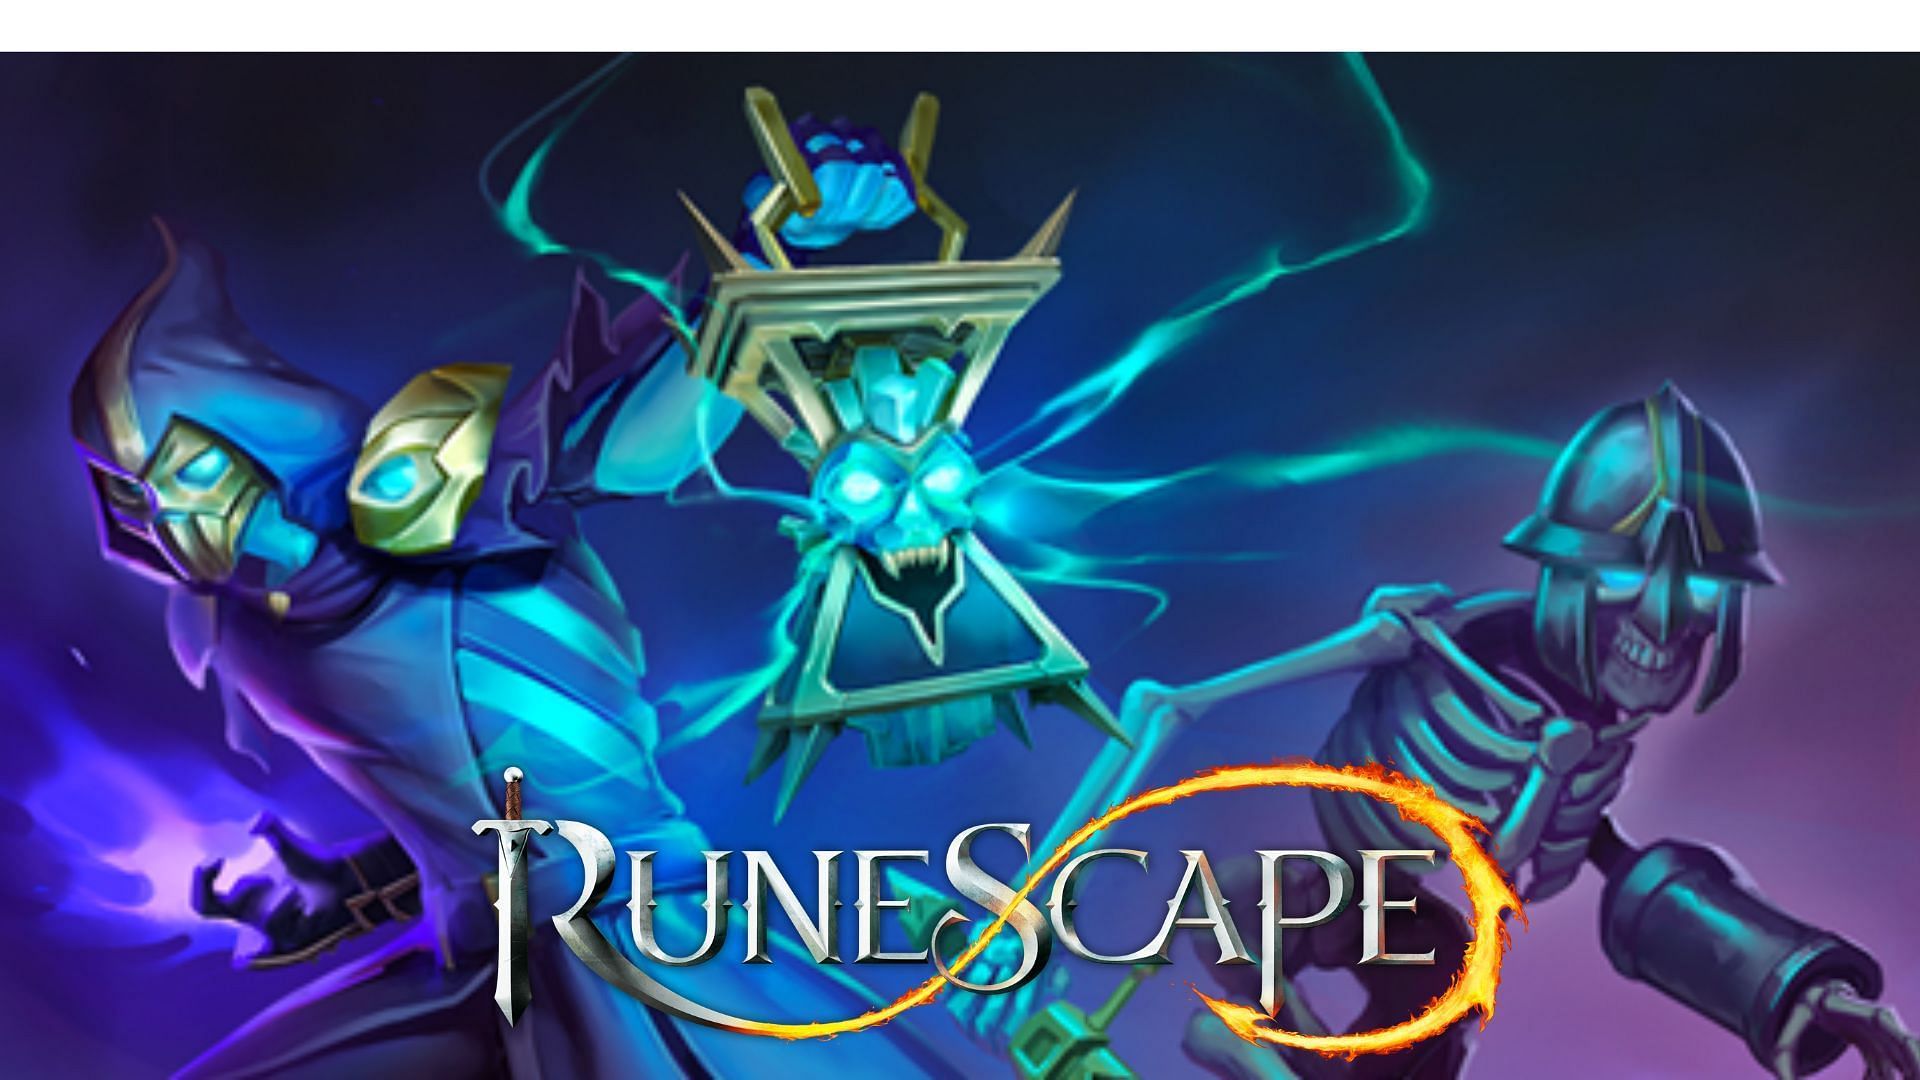 Runescape Combat Update has fixed many glitches